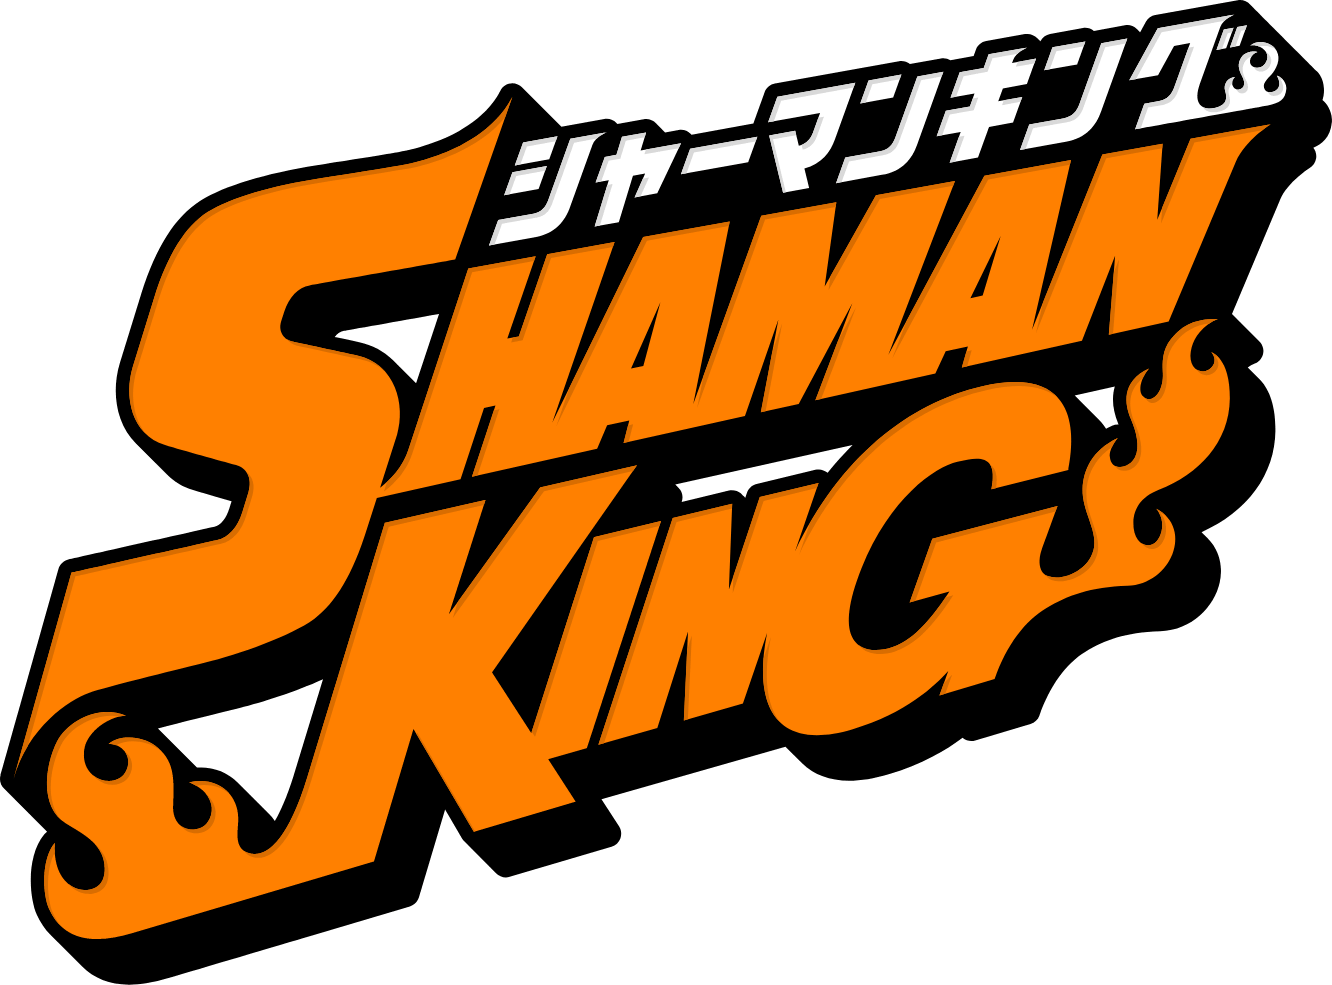 Shaman King (2001 TV series) - Wikiwand